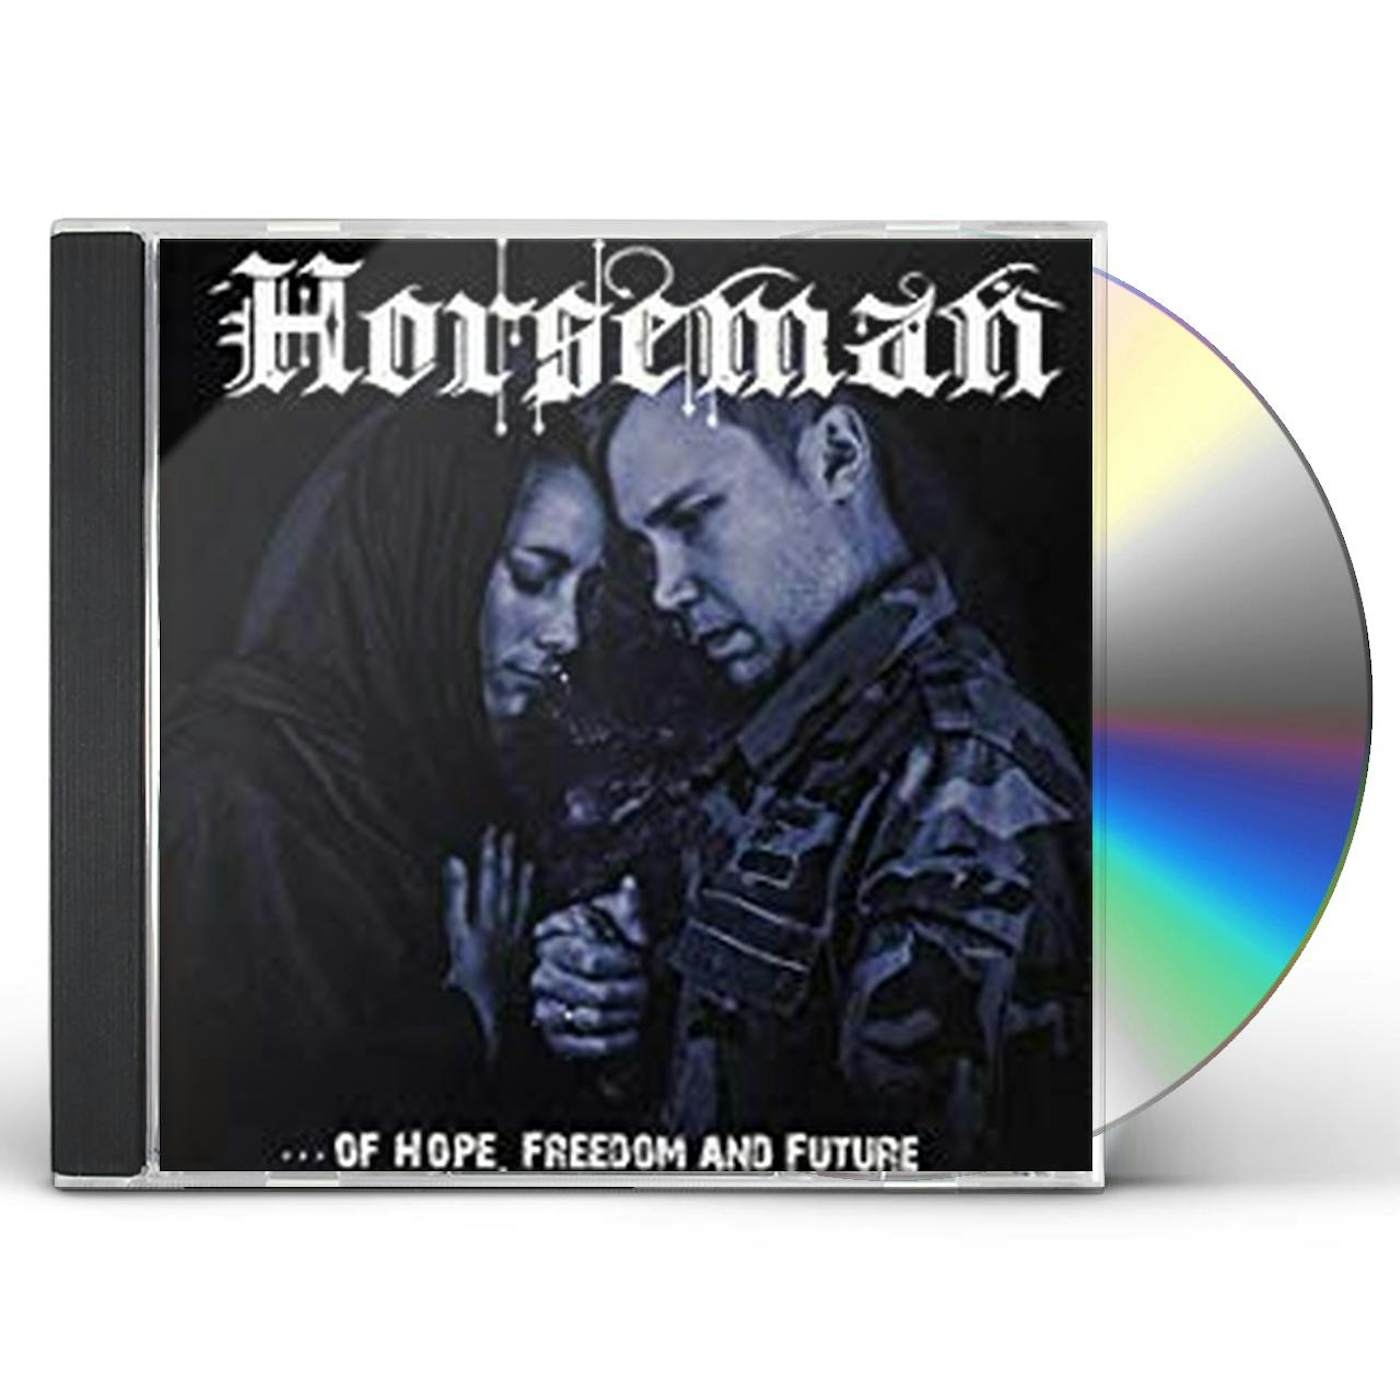 Horseman OF HOPE FREEDOM AND FUTURE CD